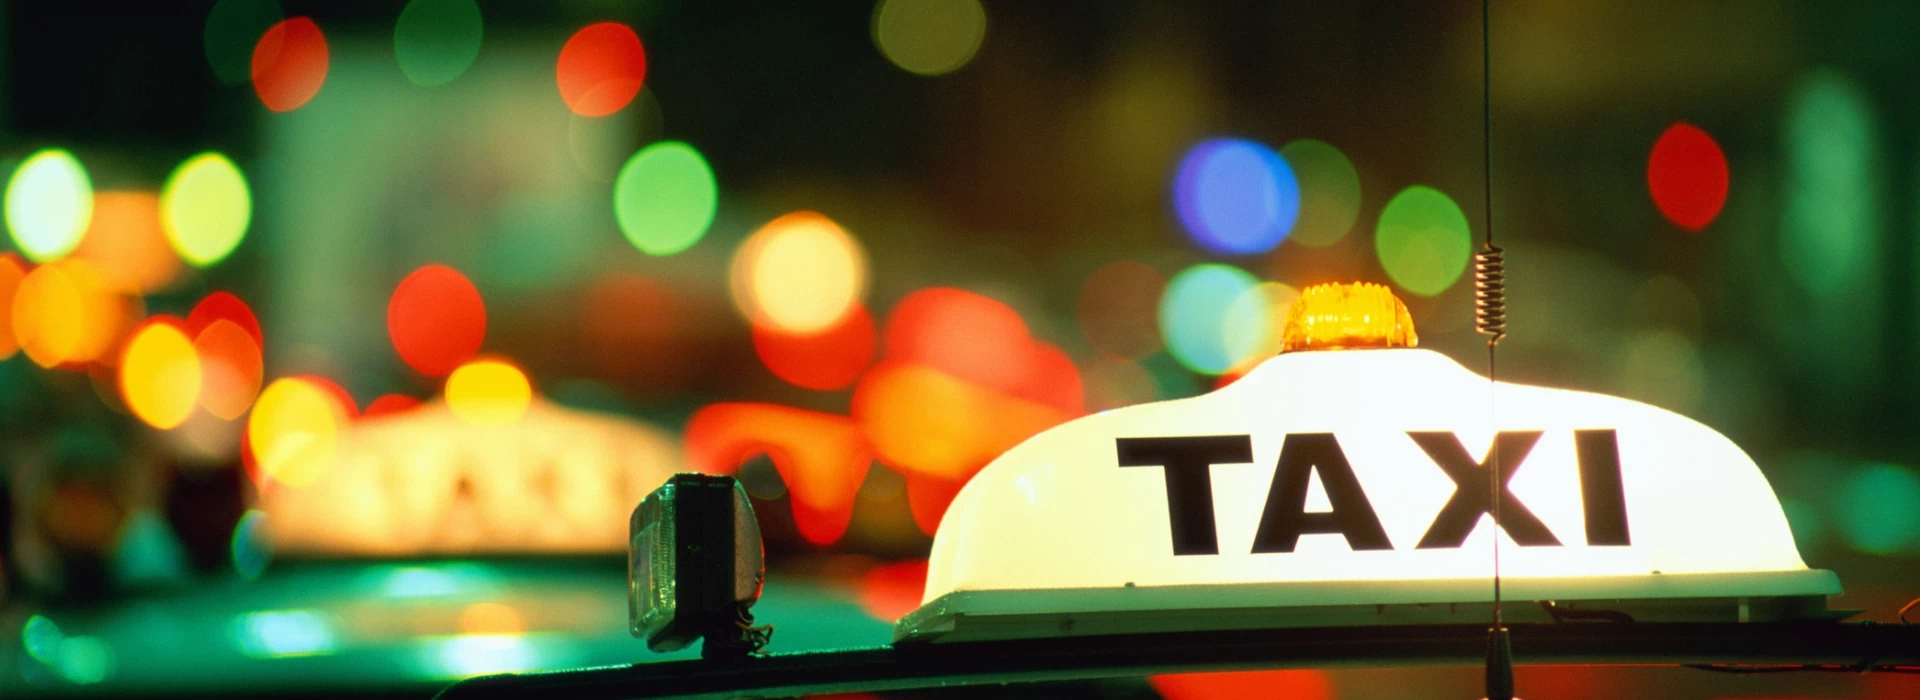 znak taksówki